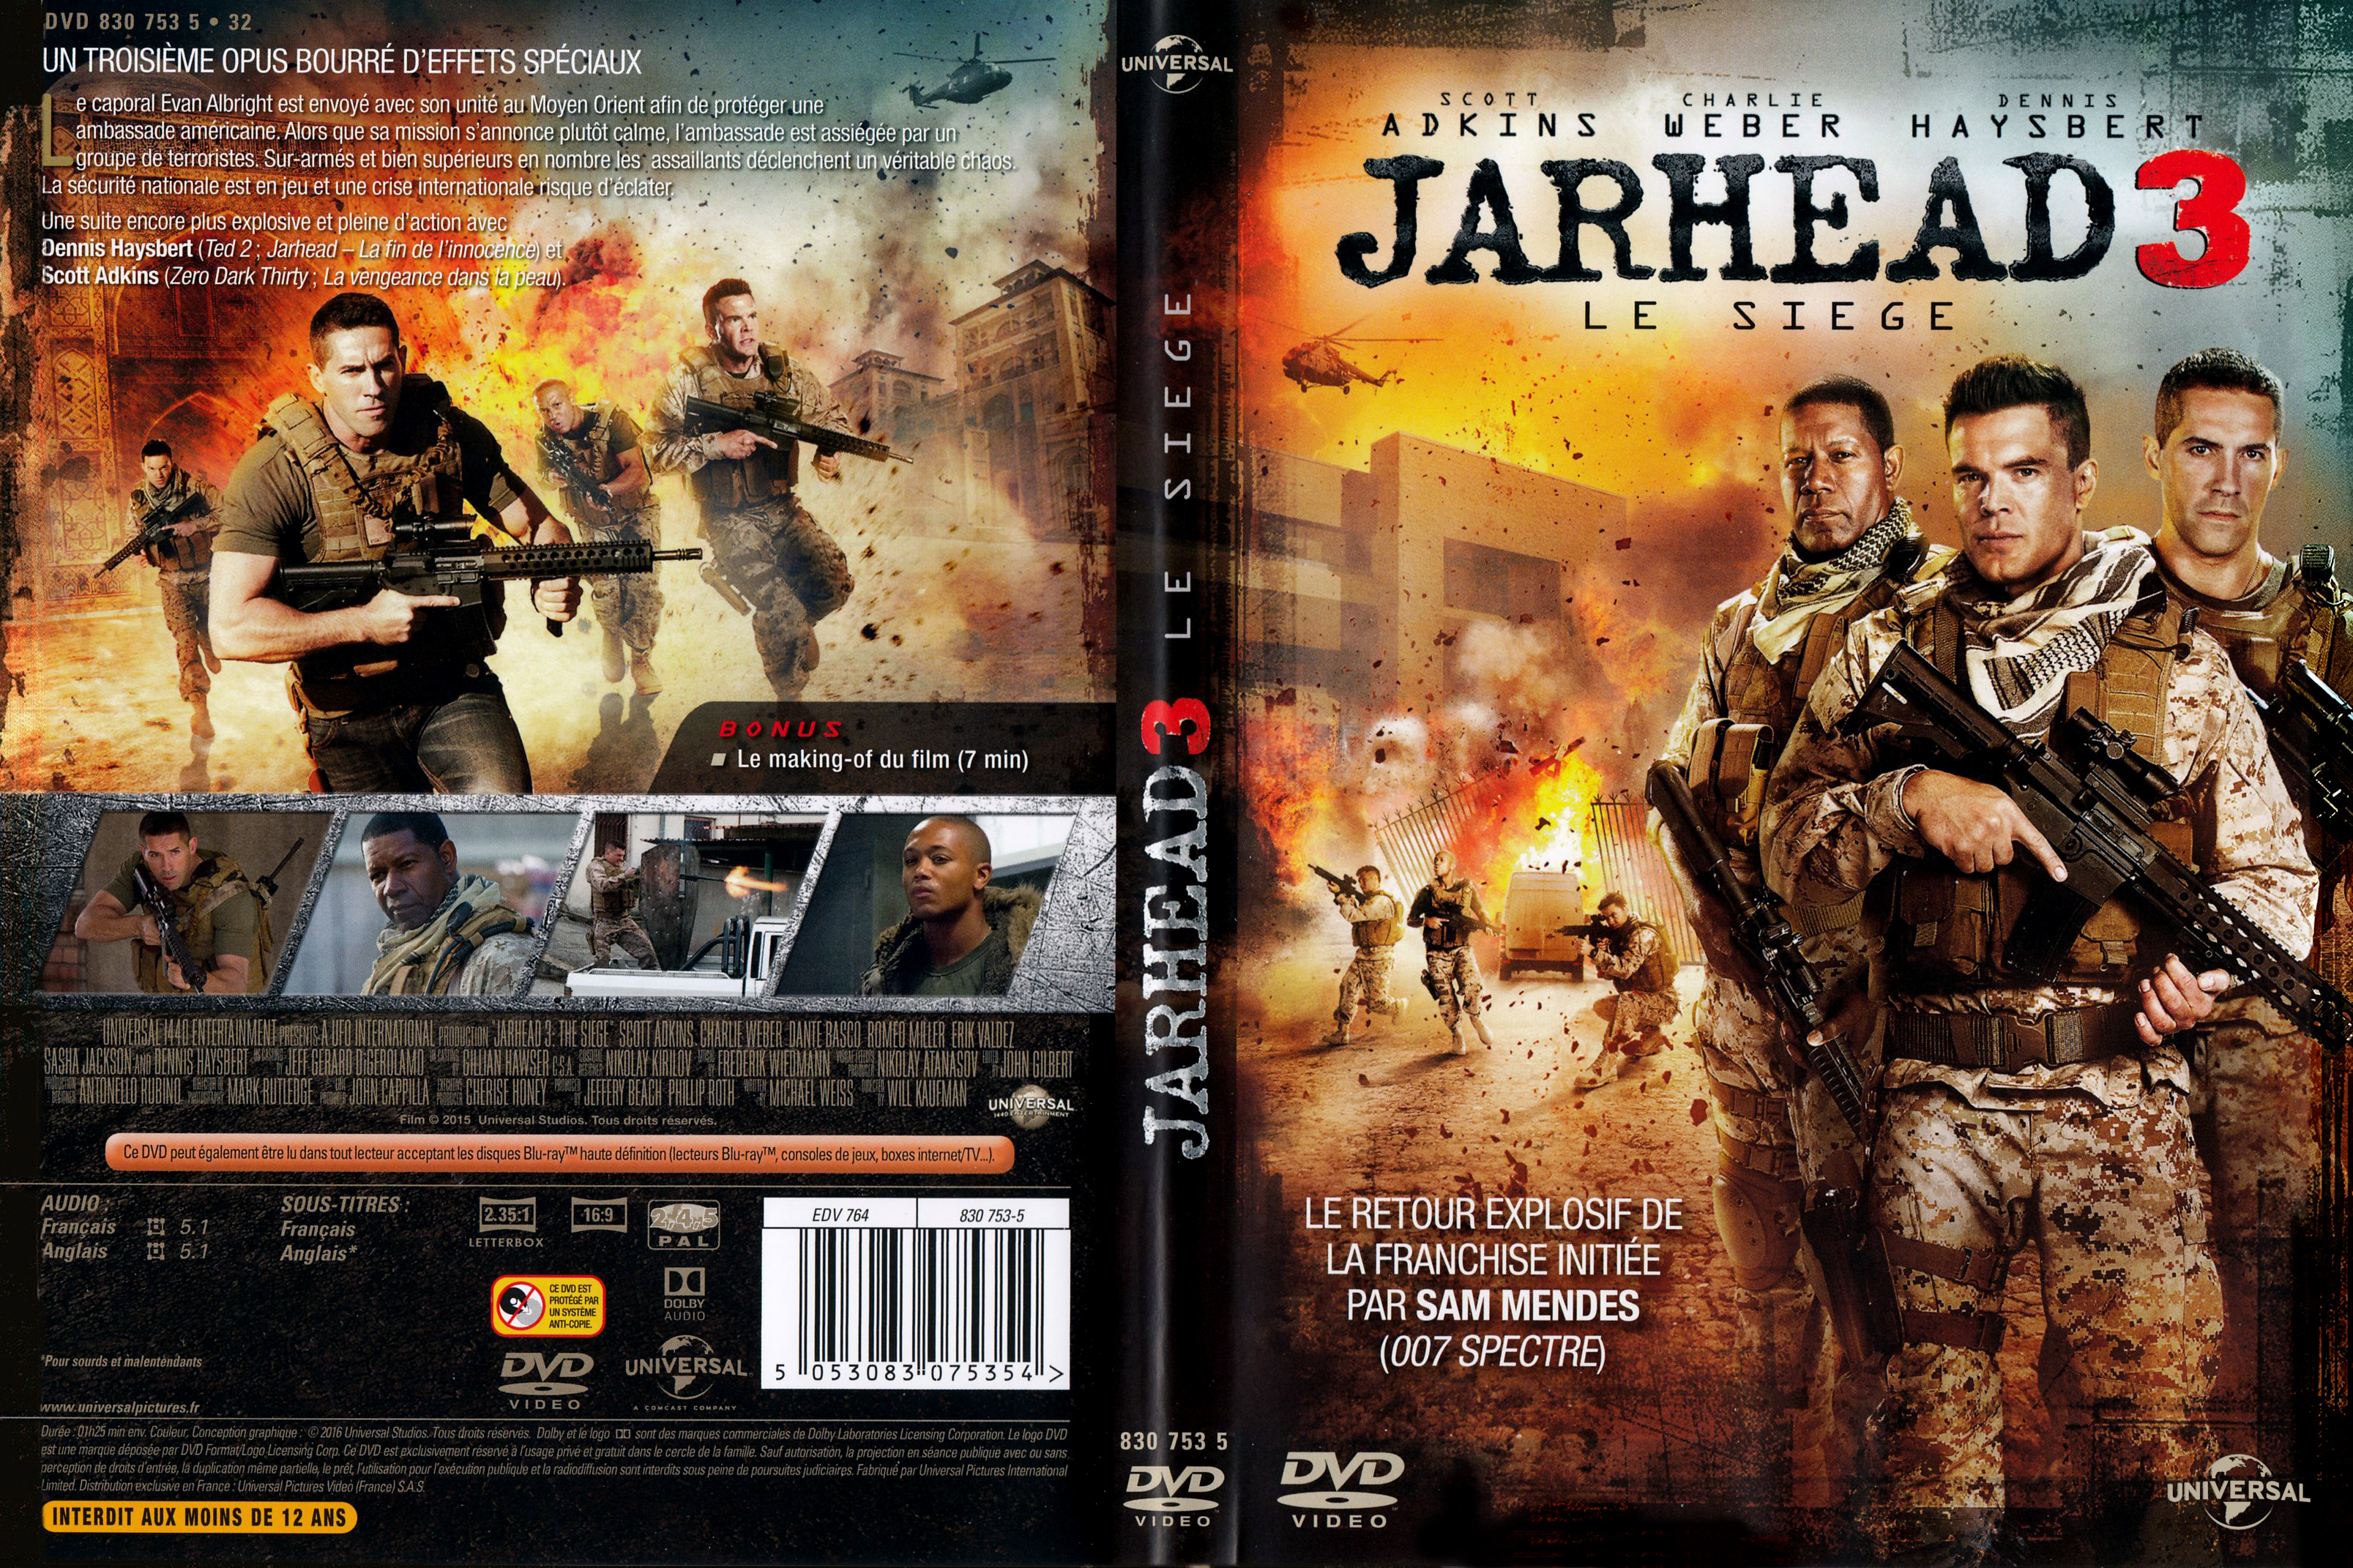 Jaquette DVD Jarhead 3 Le sige